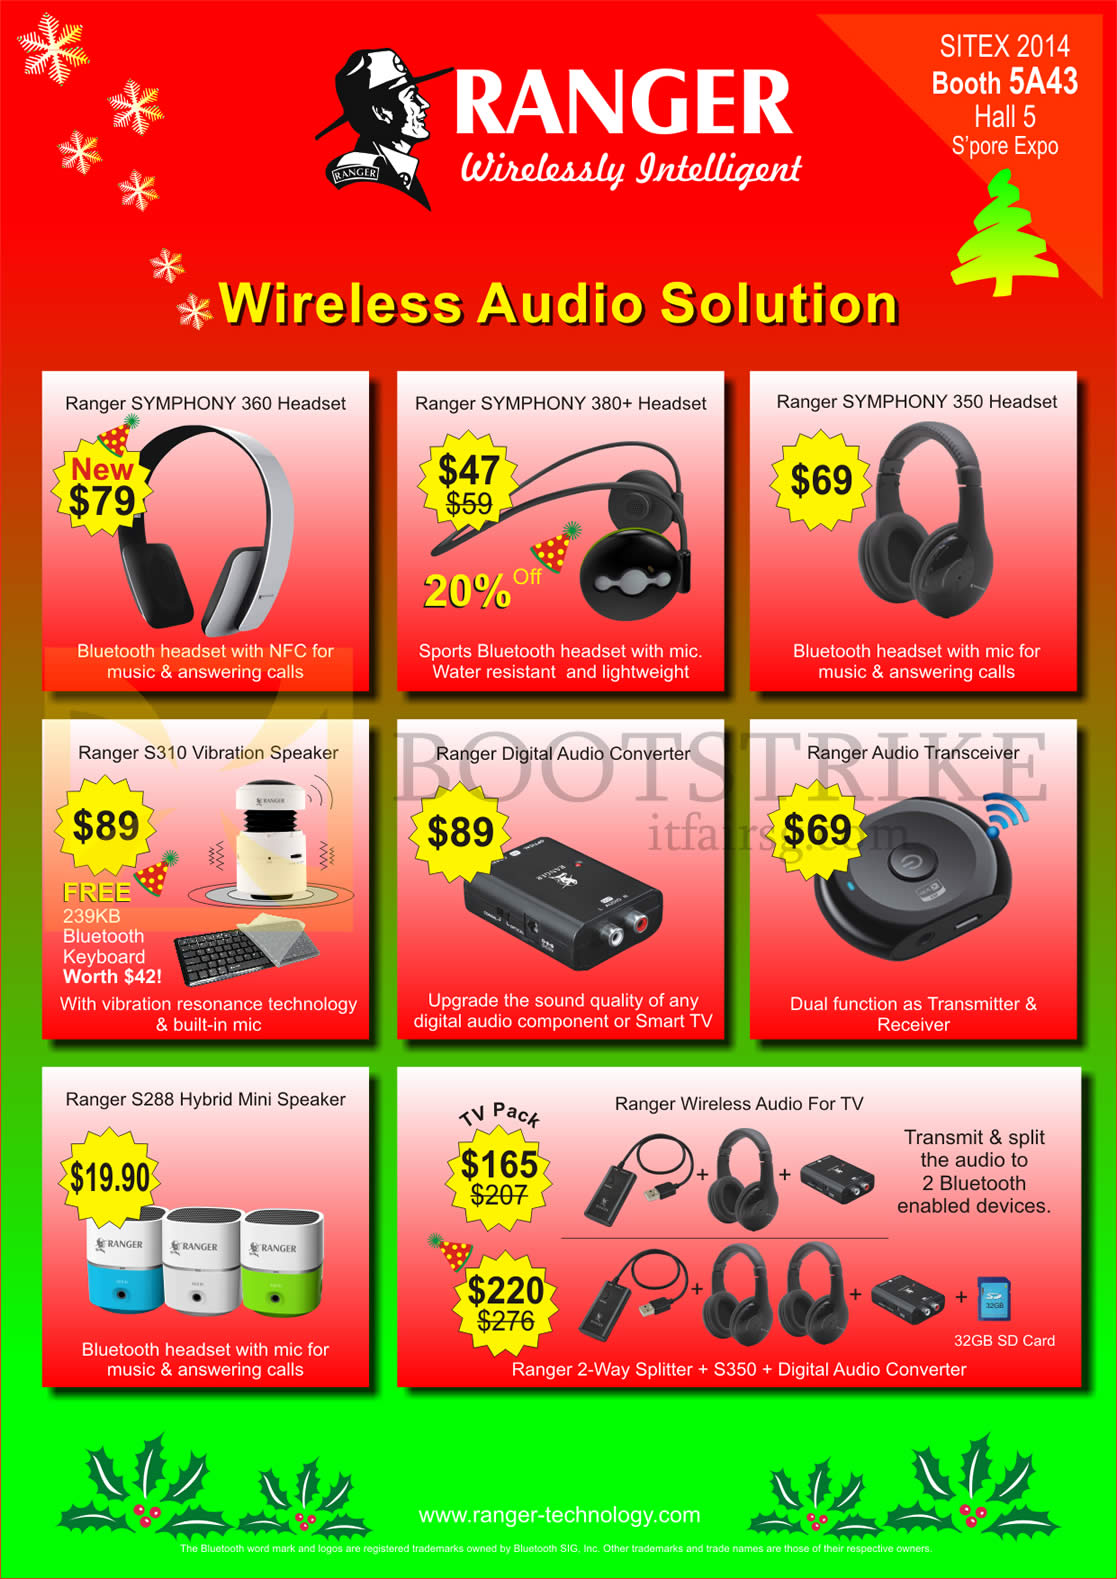 SITEX 2014 price list image brochure of Ranger Wireless Audio Headsets, Vibration Speakers, Audio Converters, Audio Transceiver, Mini Speakers